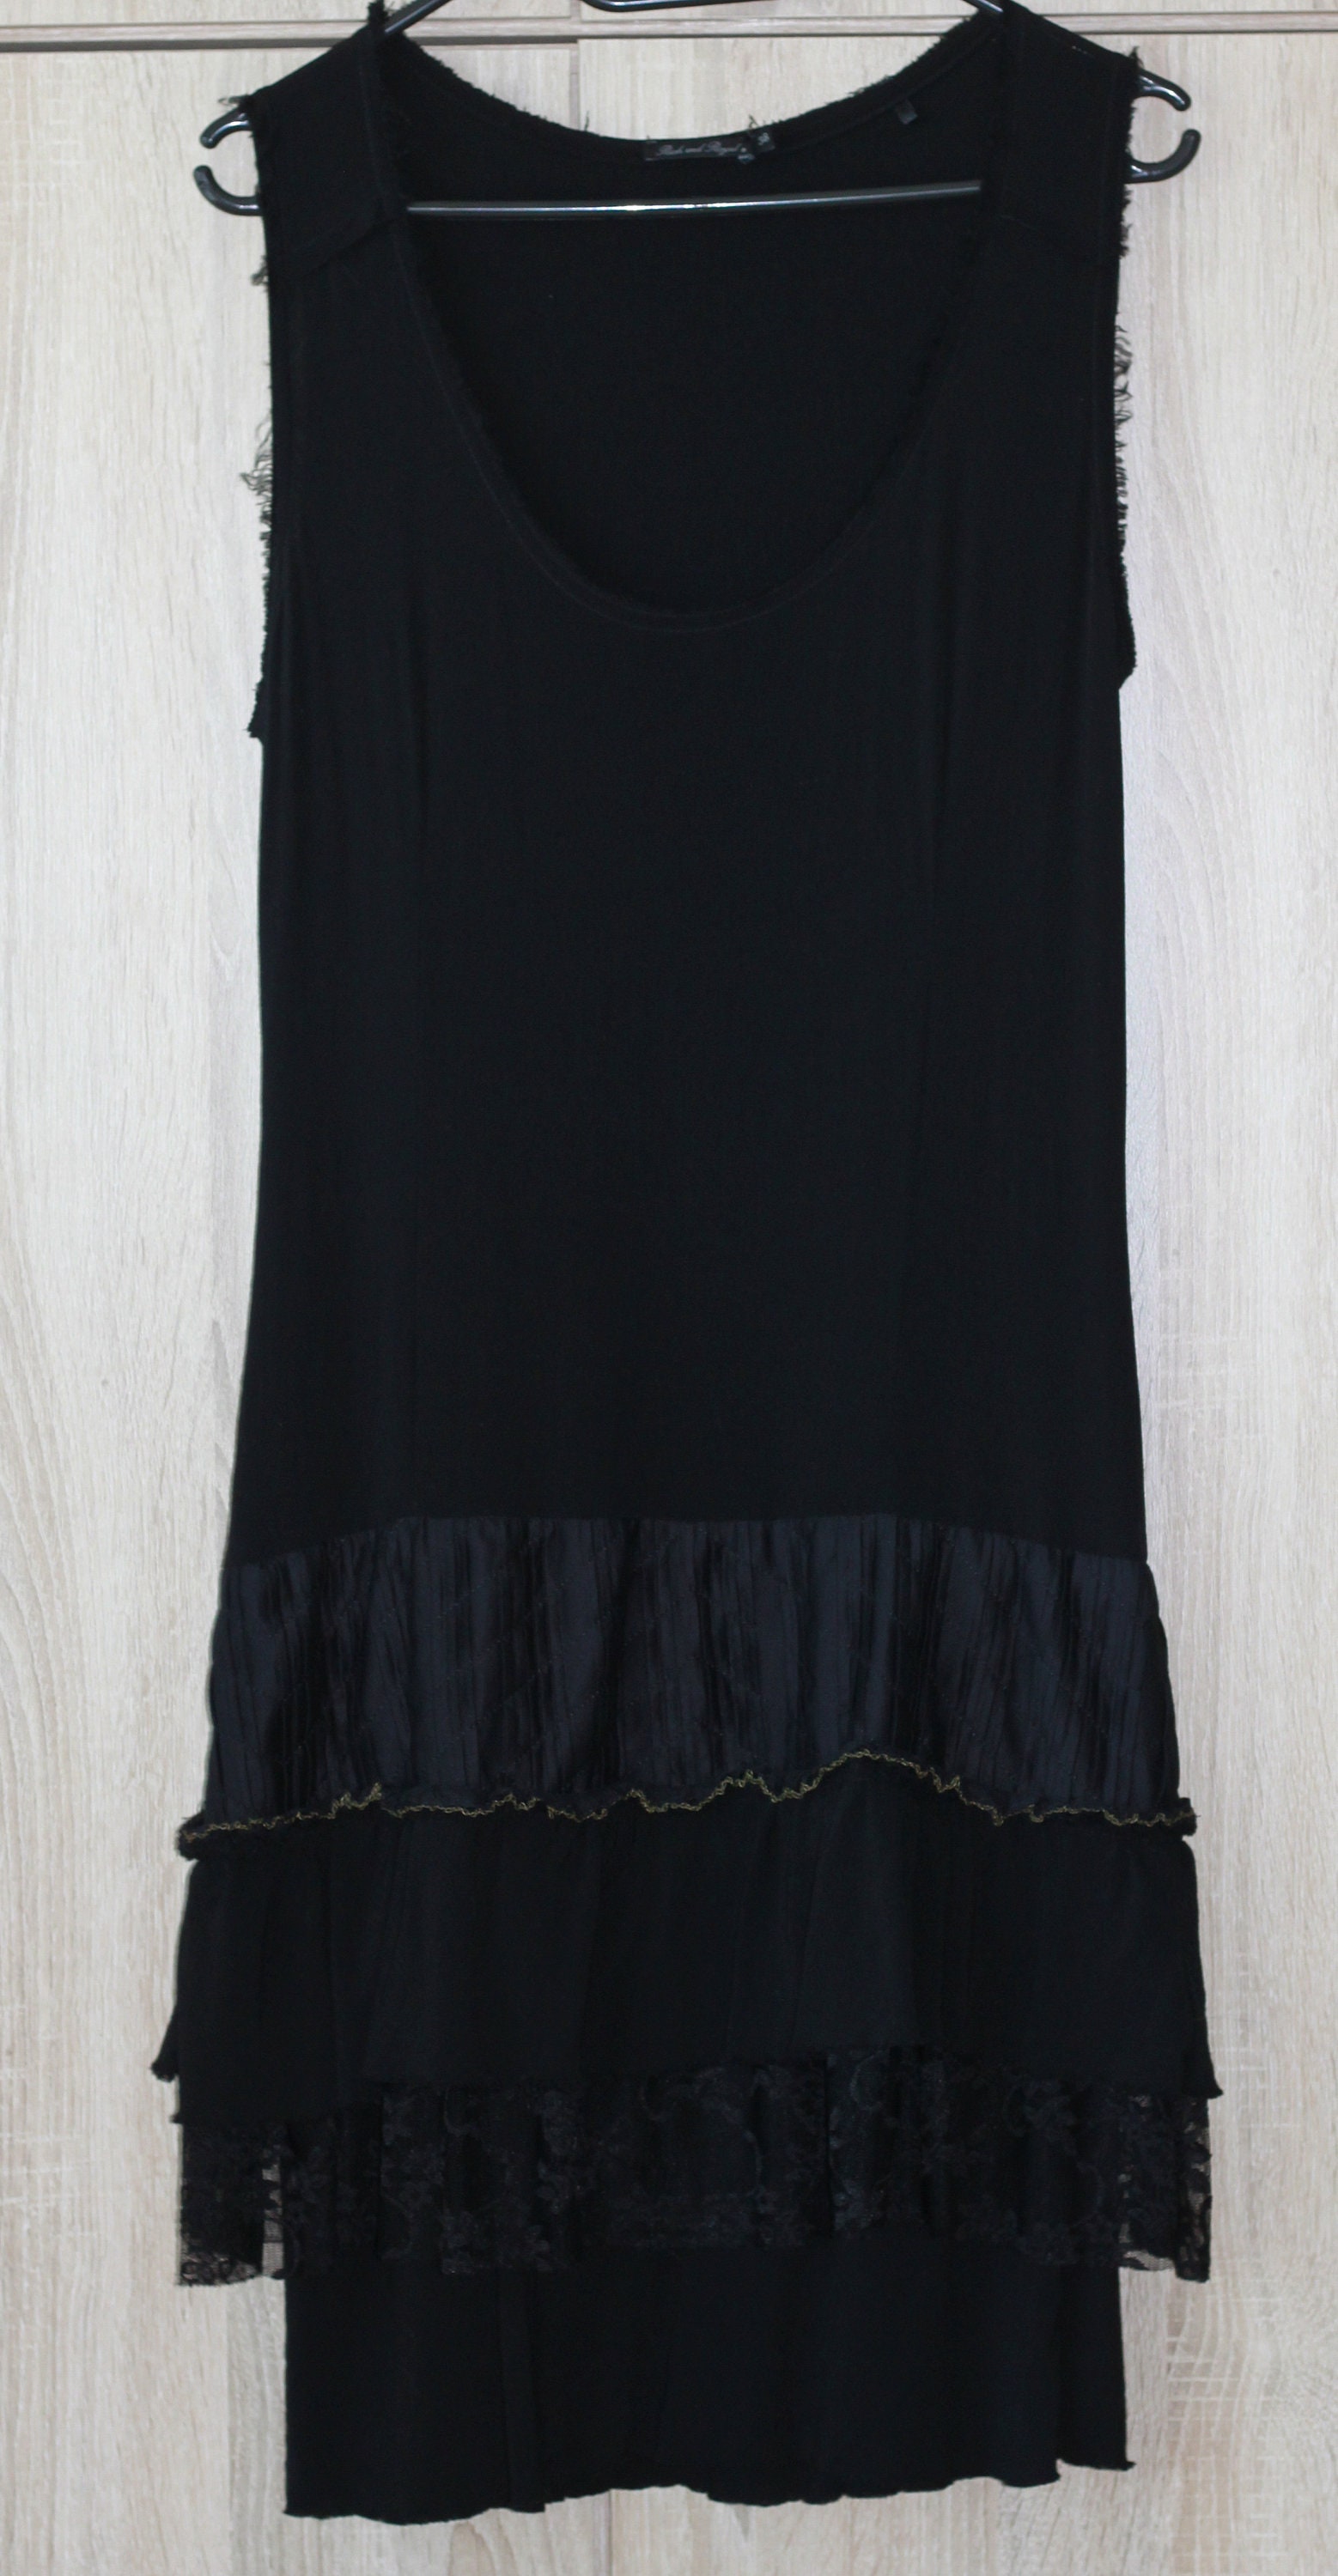 Sleeveless Black Vintage Style Dress Gothic Style Rich & Royal - Etsy